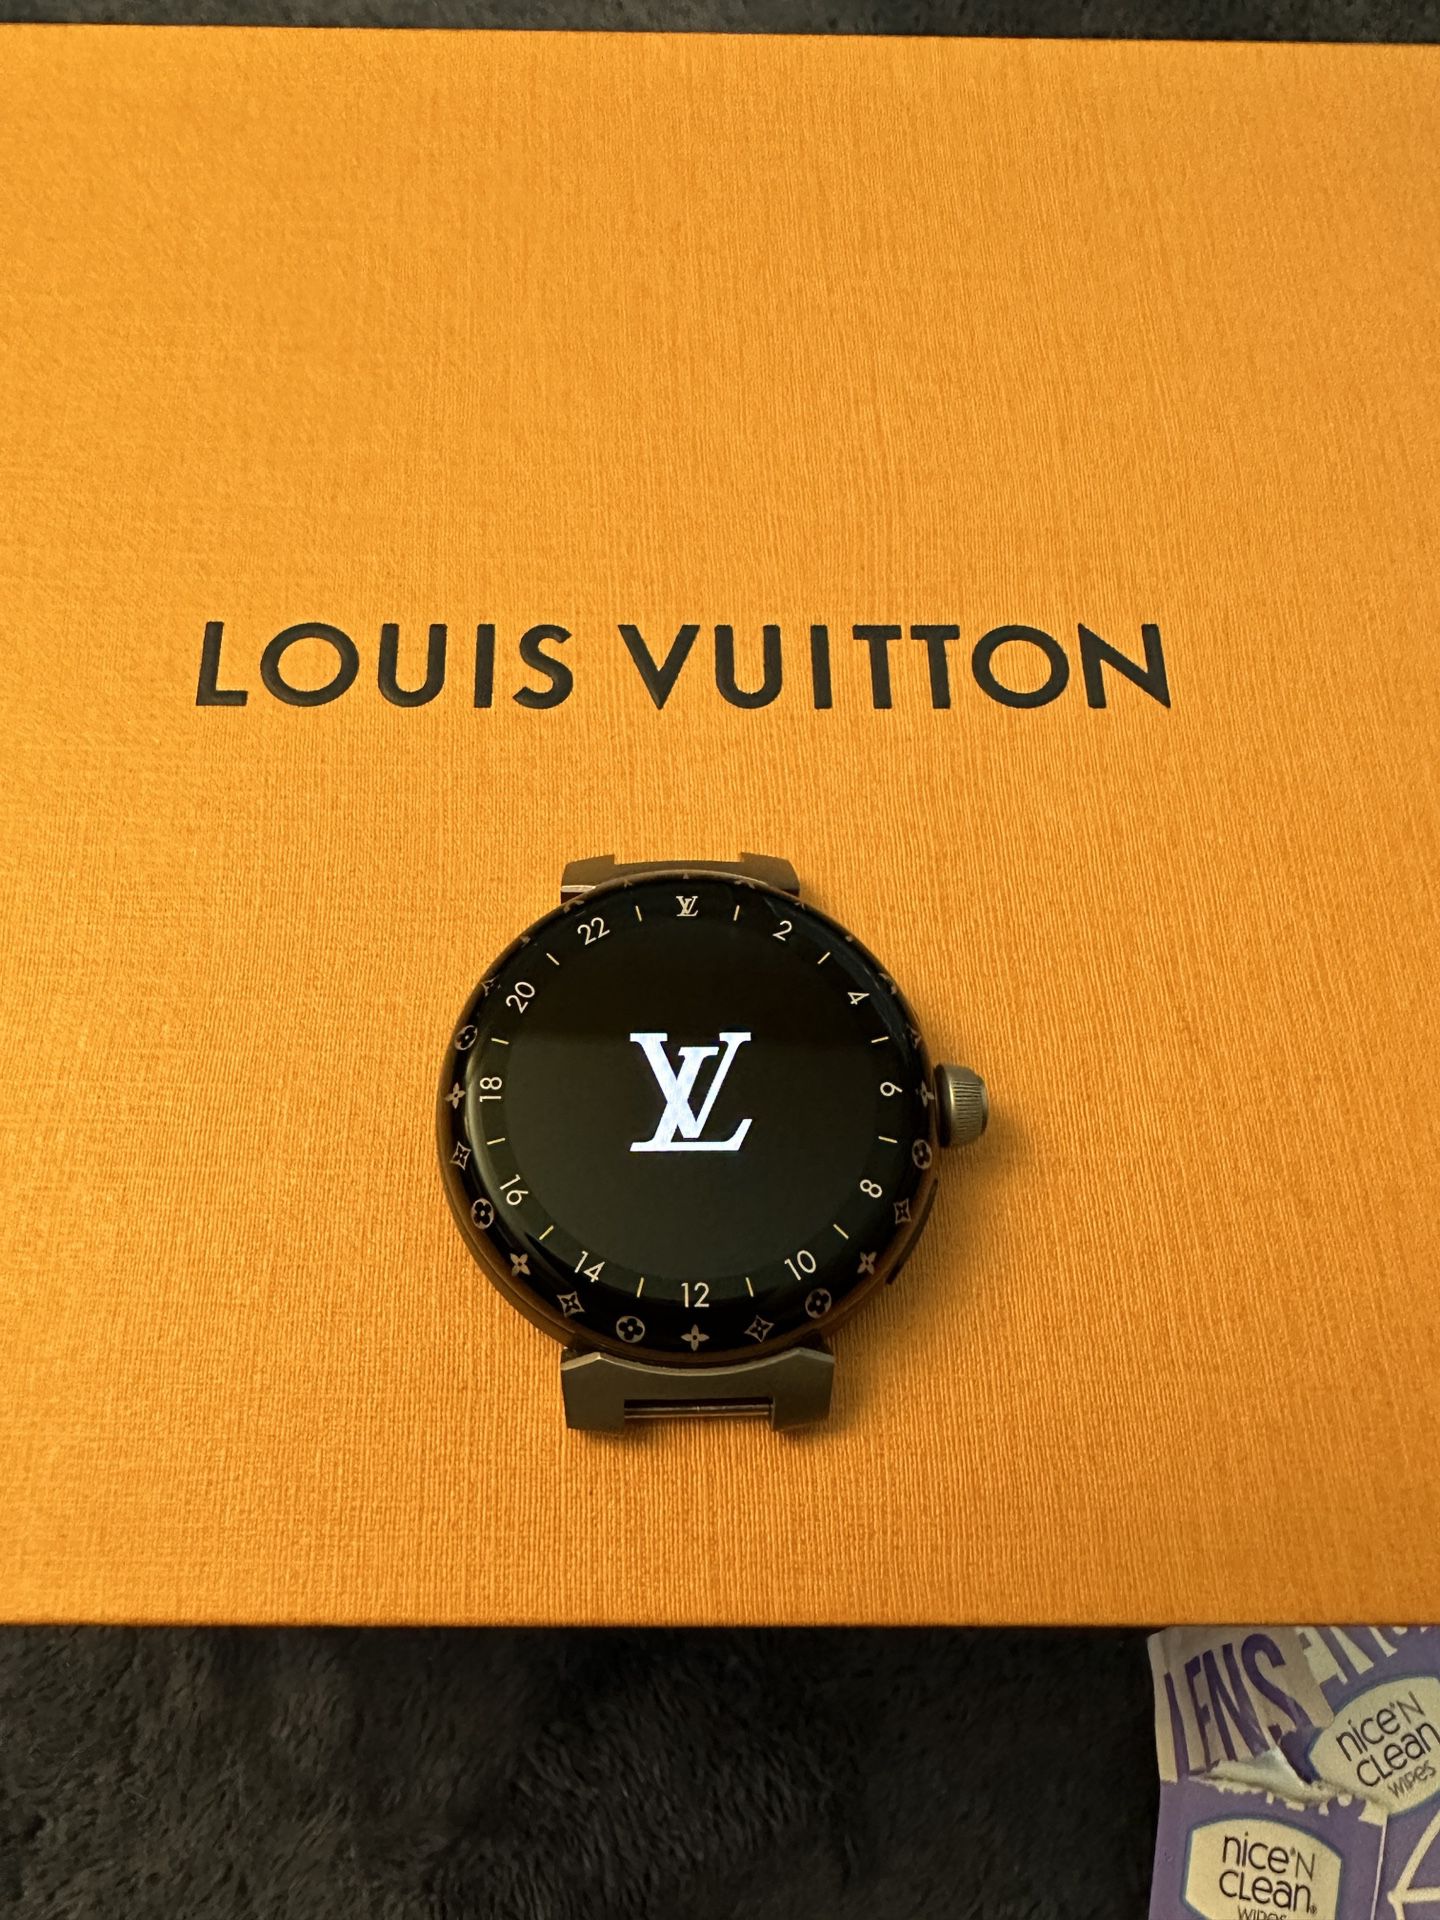 LOUIS VUITTON Tambour Horizon Light Up Connected Watch Black. Size